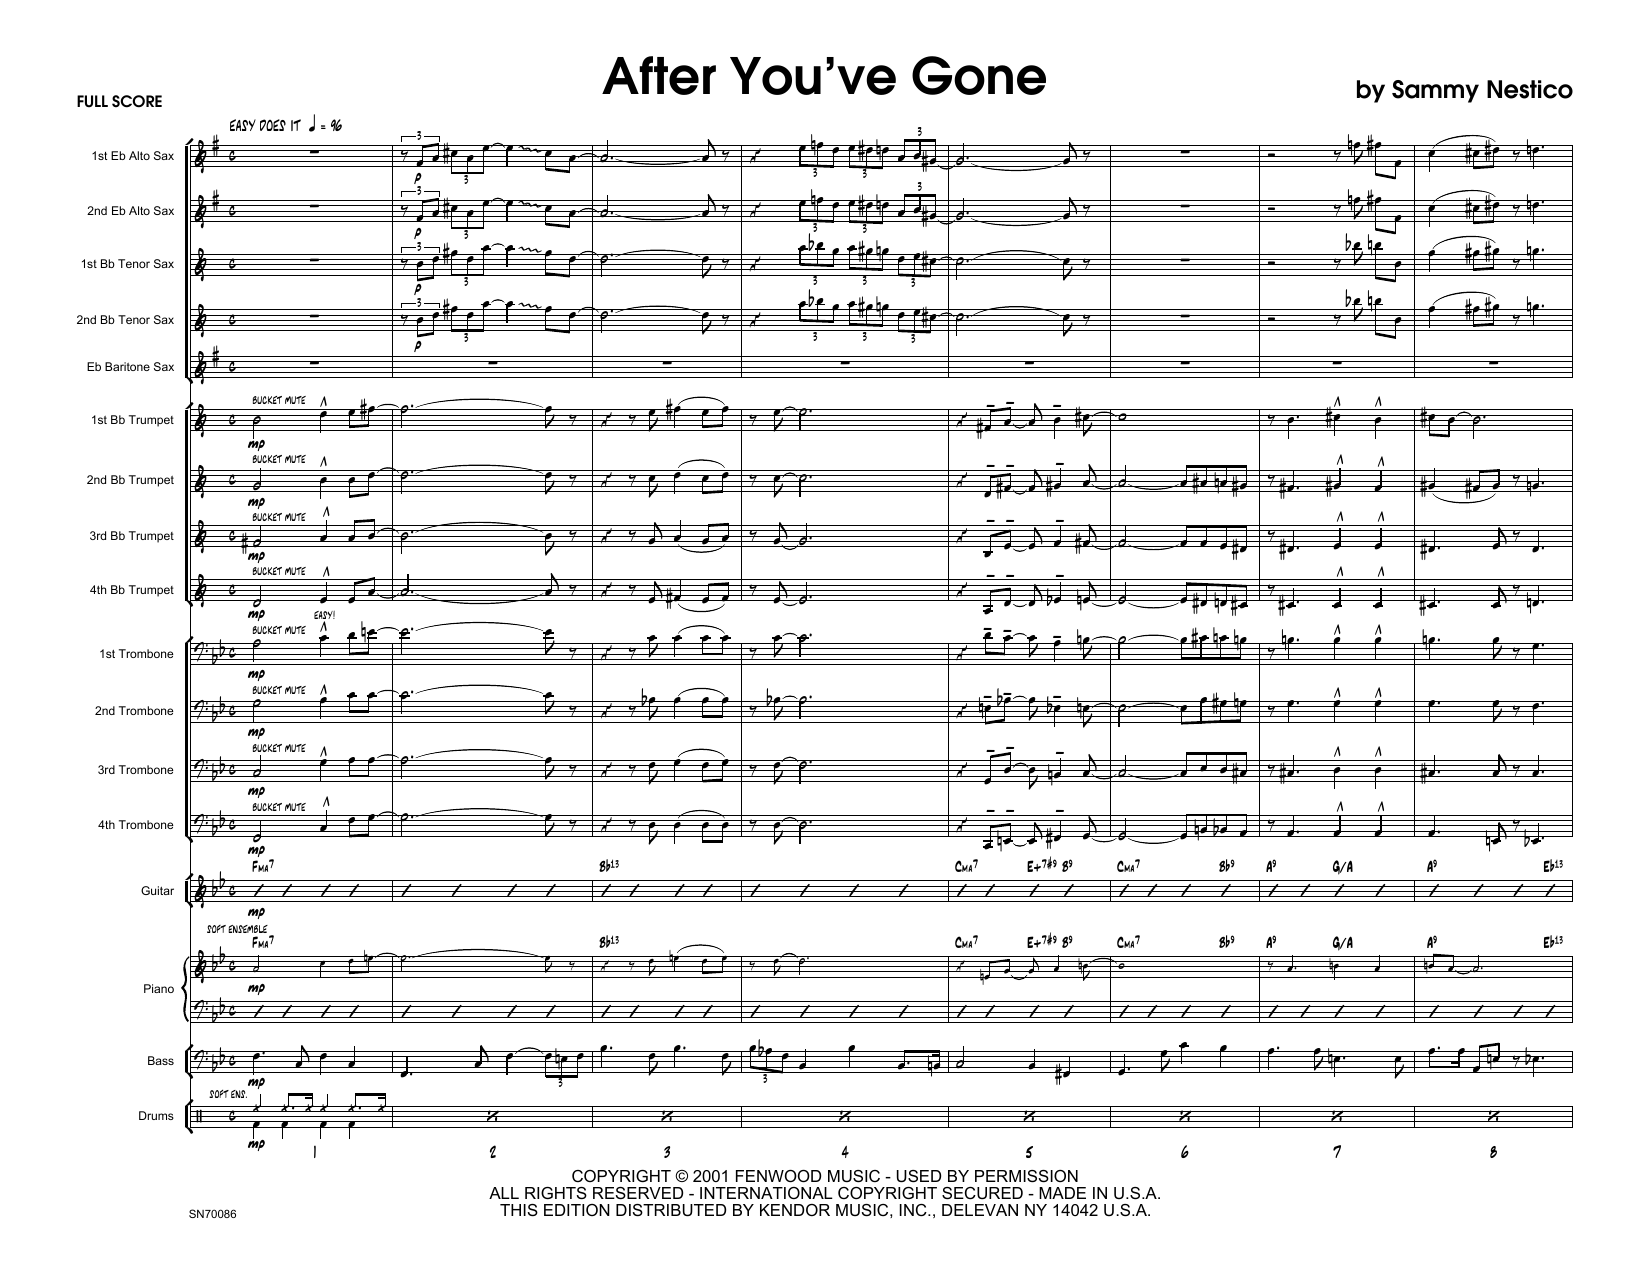 Download Sammy Nestico After You've Gone - Full Score Sheet Music